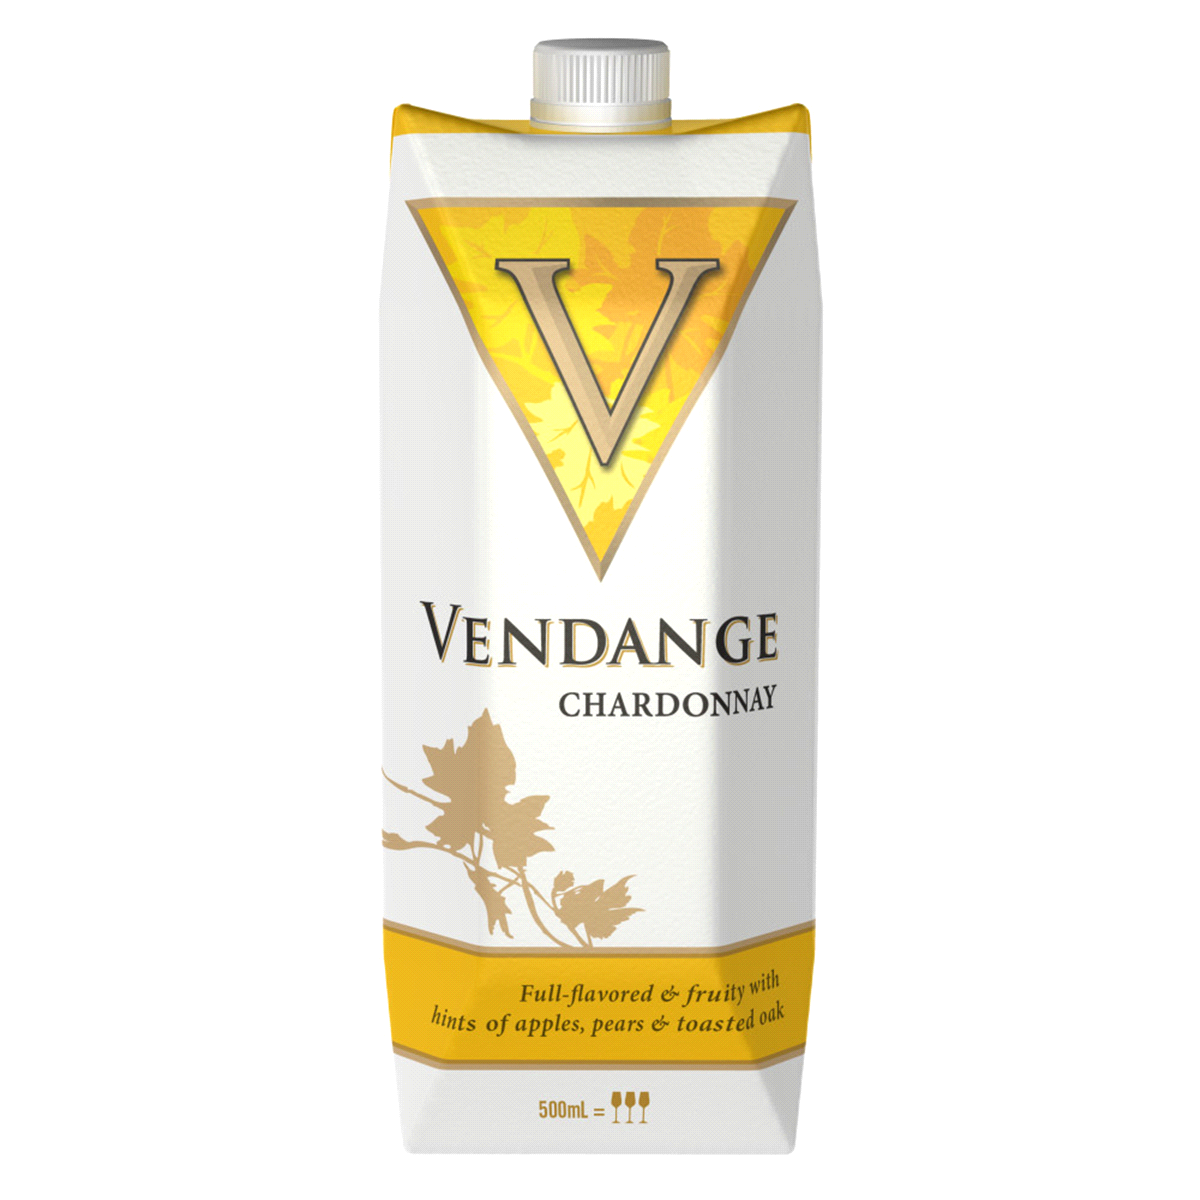 images/wine/WHITE WINE/Vendange Chardonnay.png